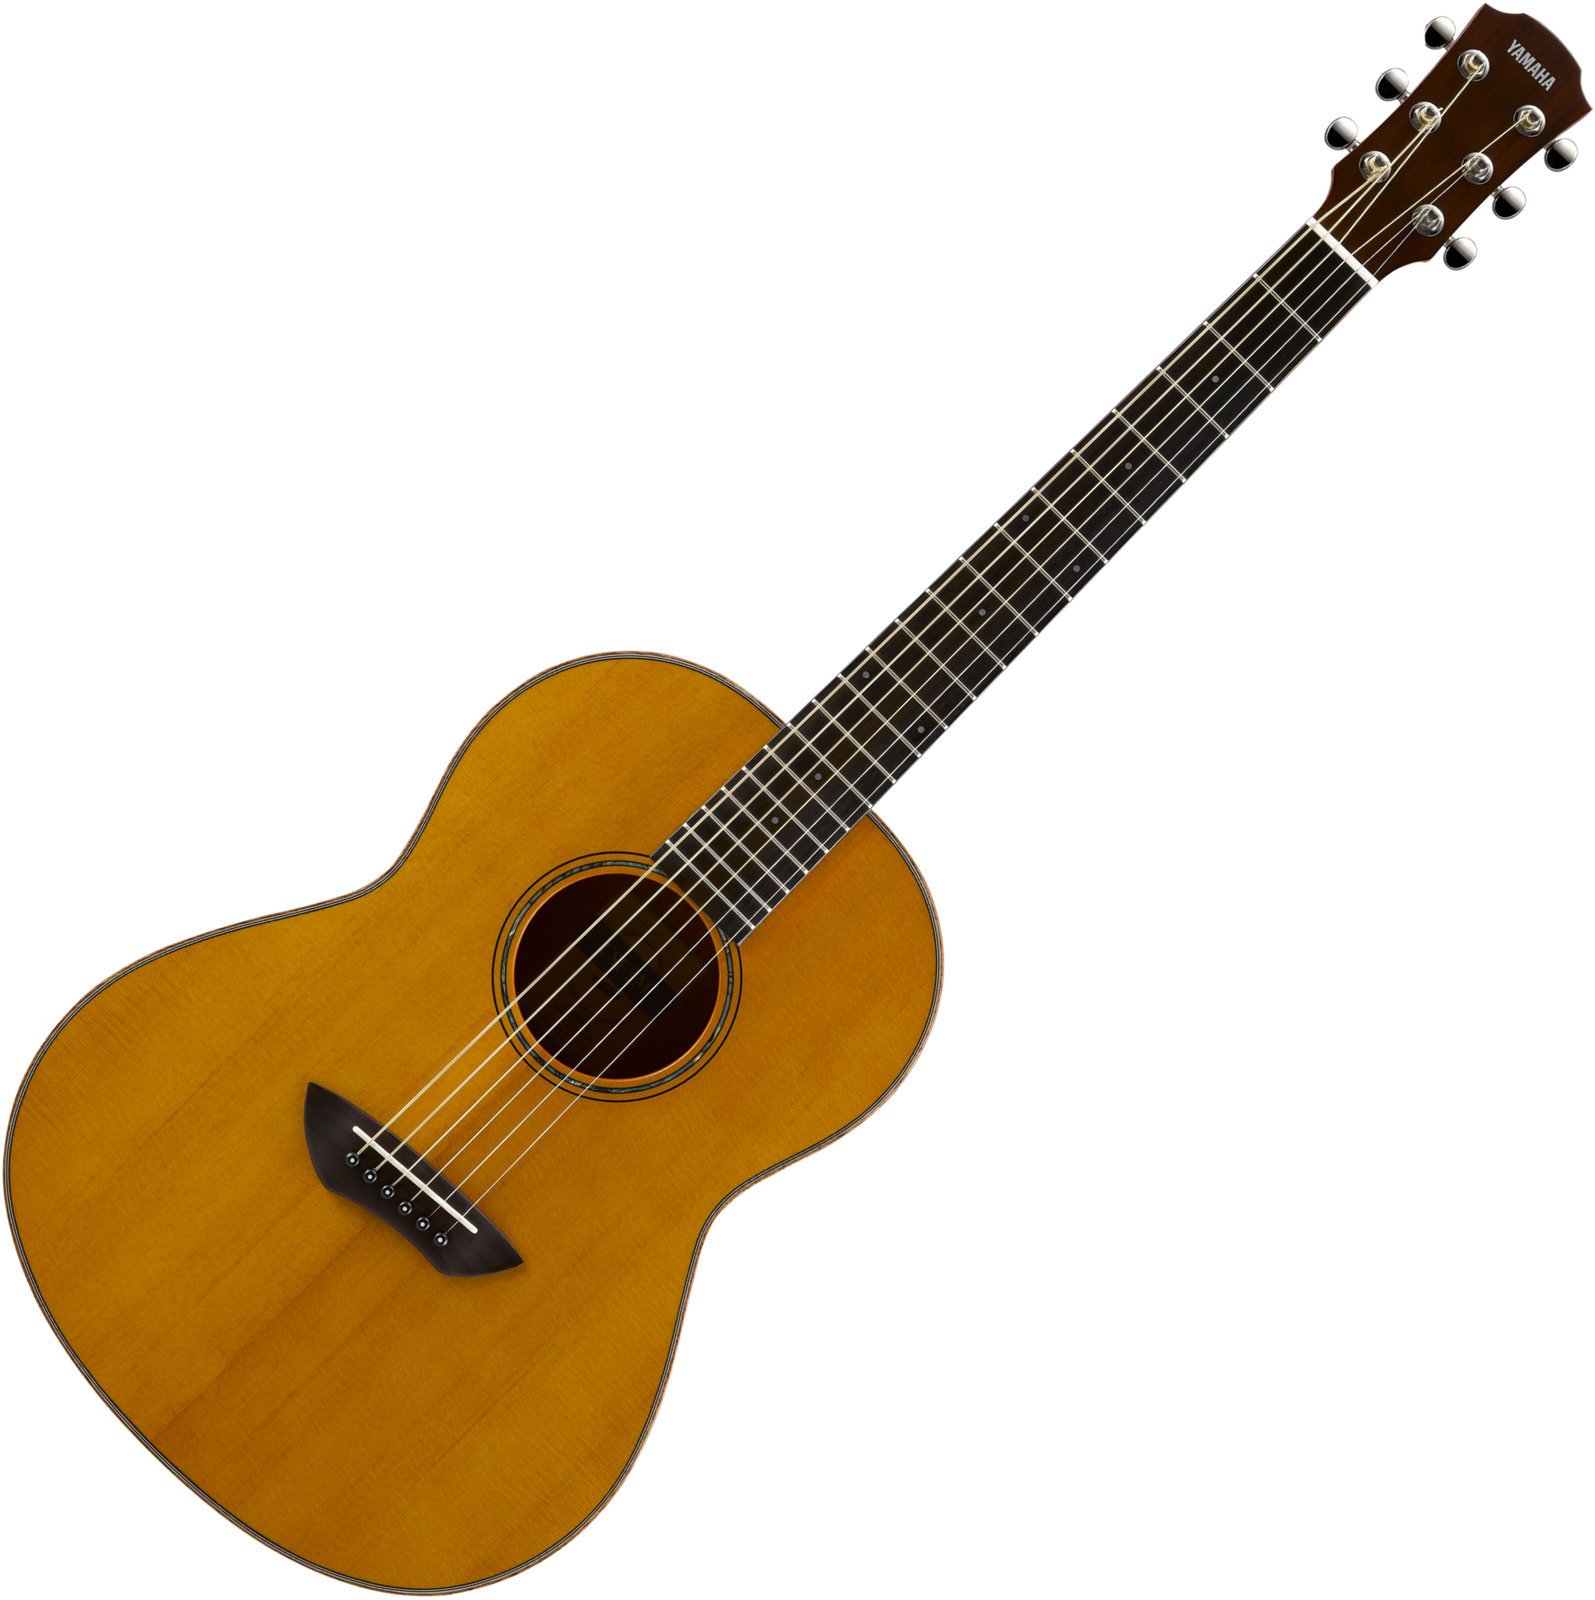 Electro-acoustic guitar Yamaha CSF3M Vintage Natural